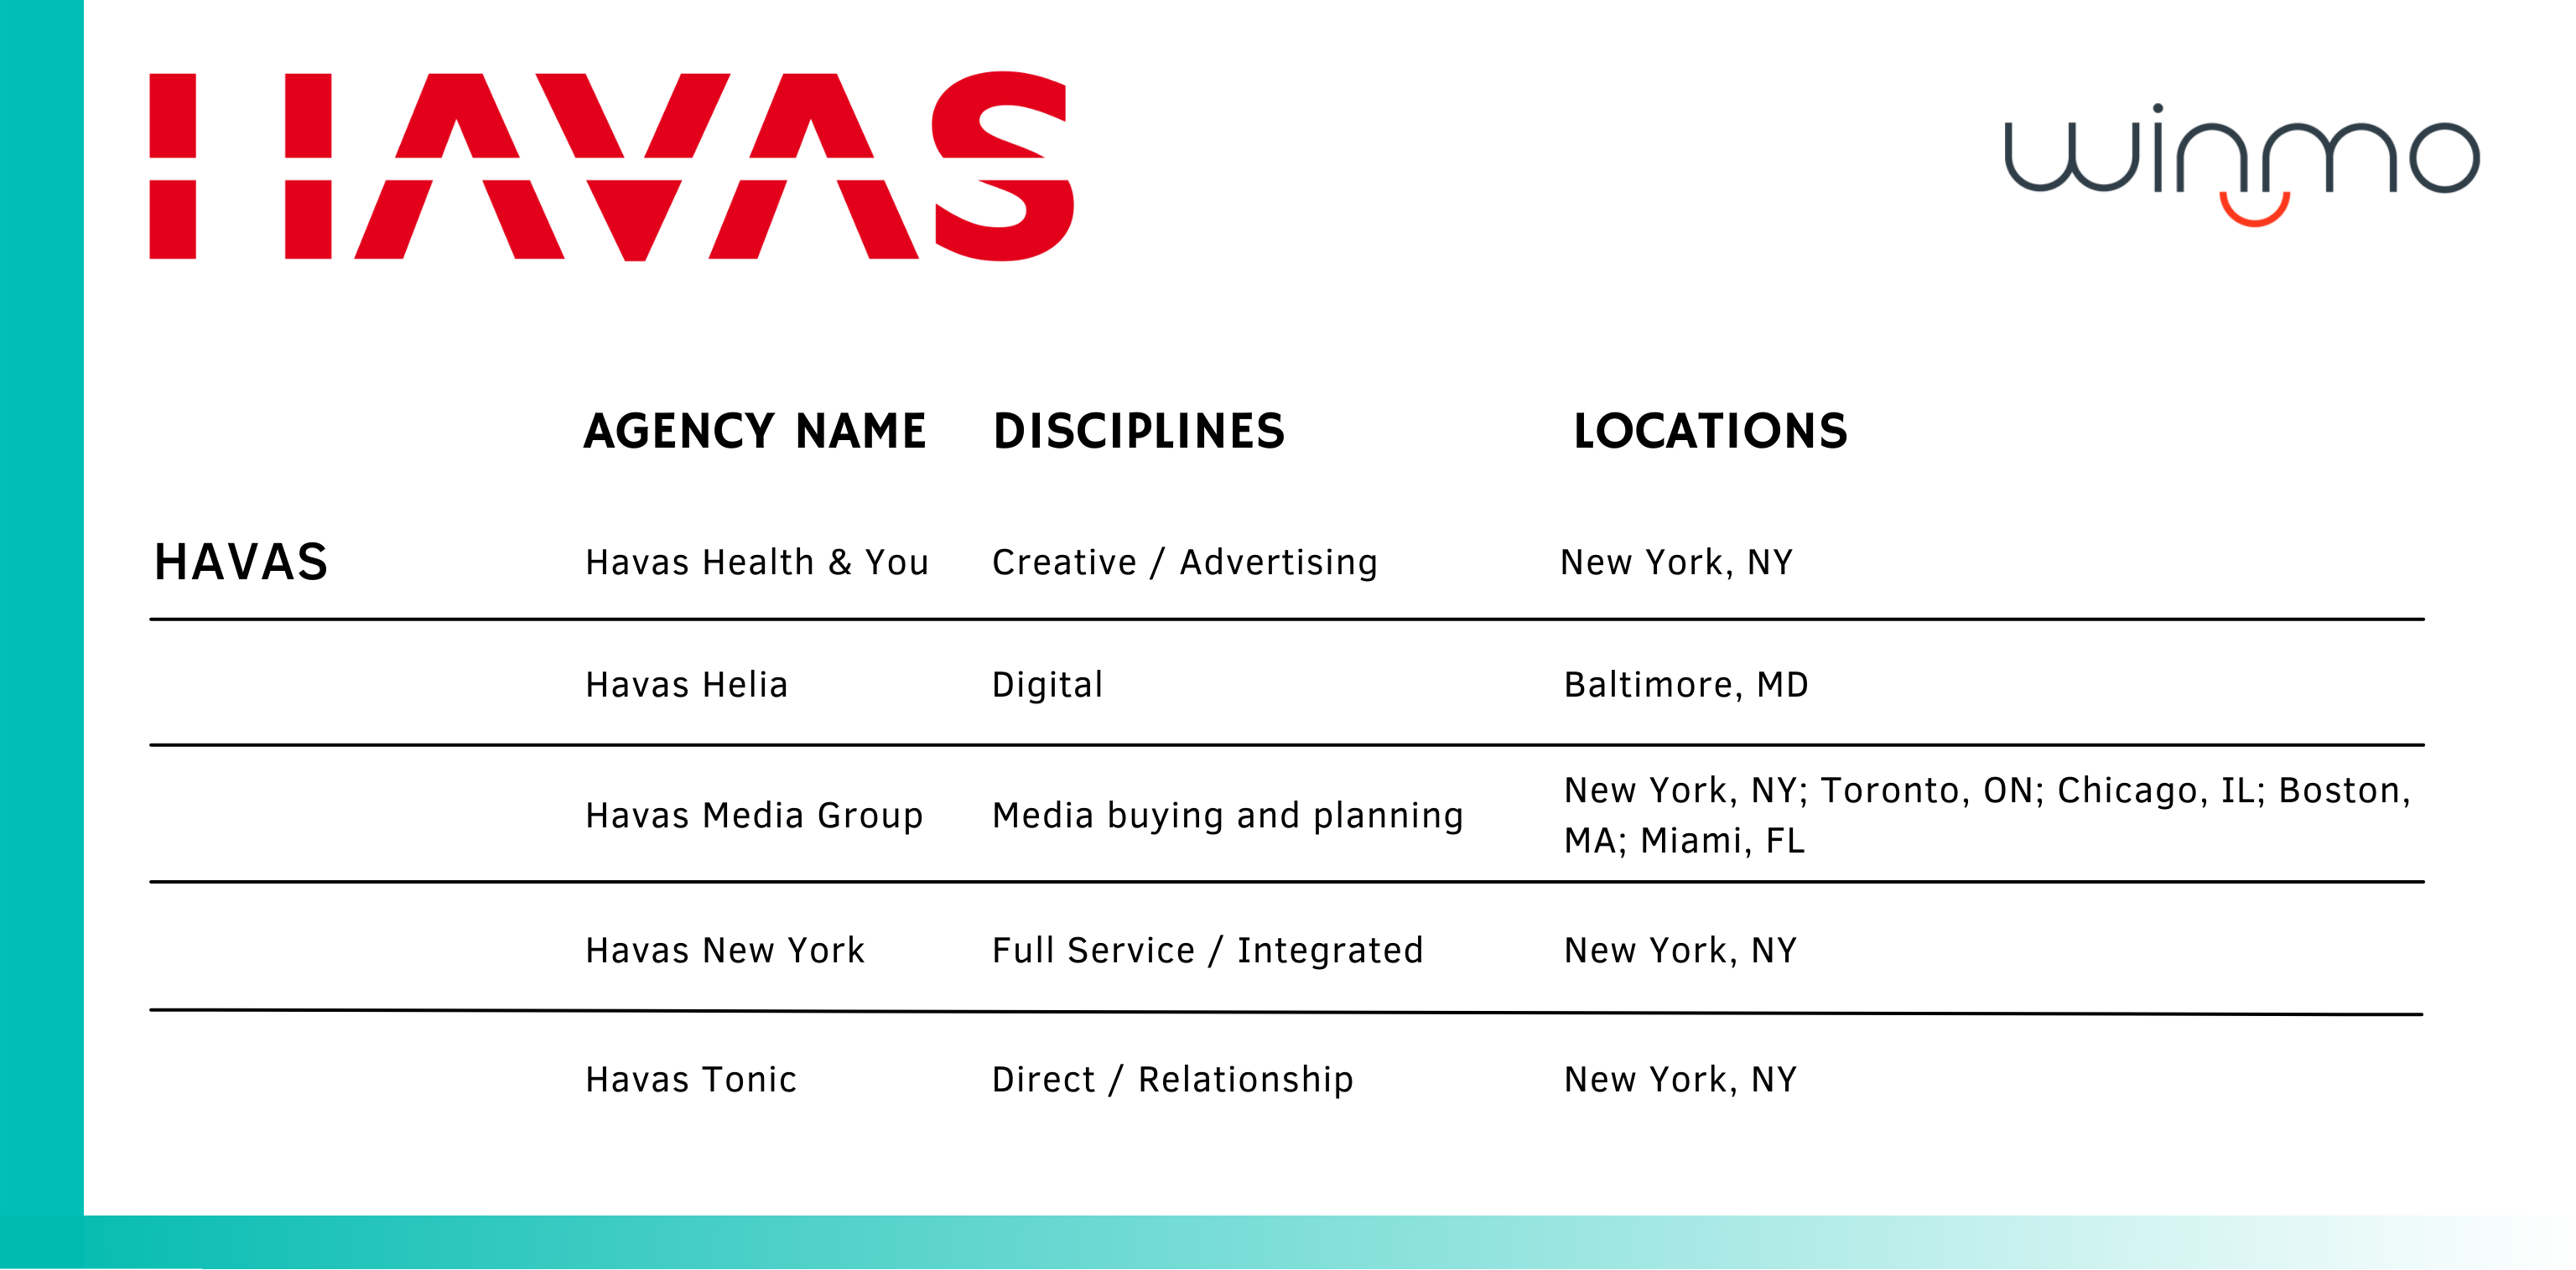 Havas agency holding companies